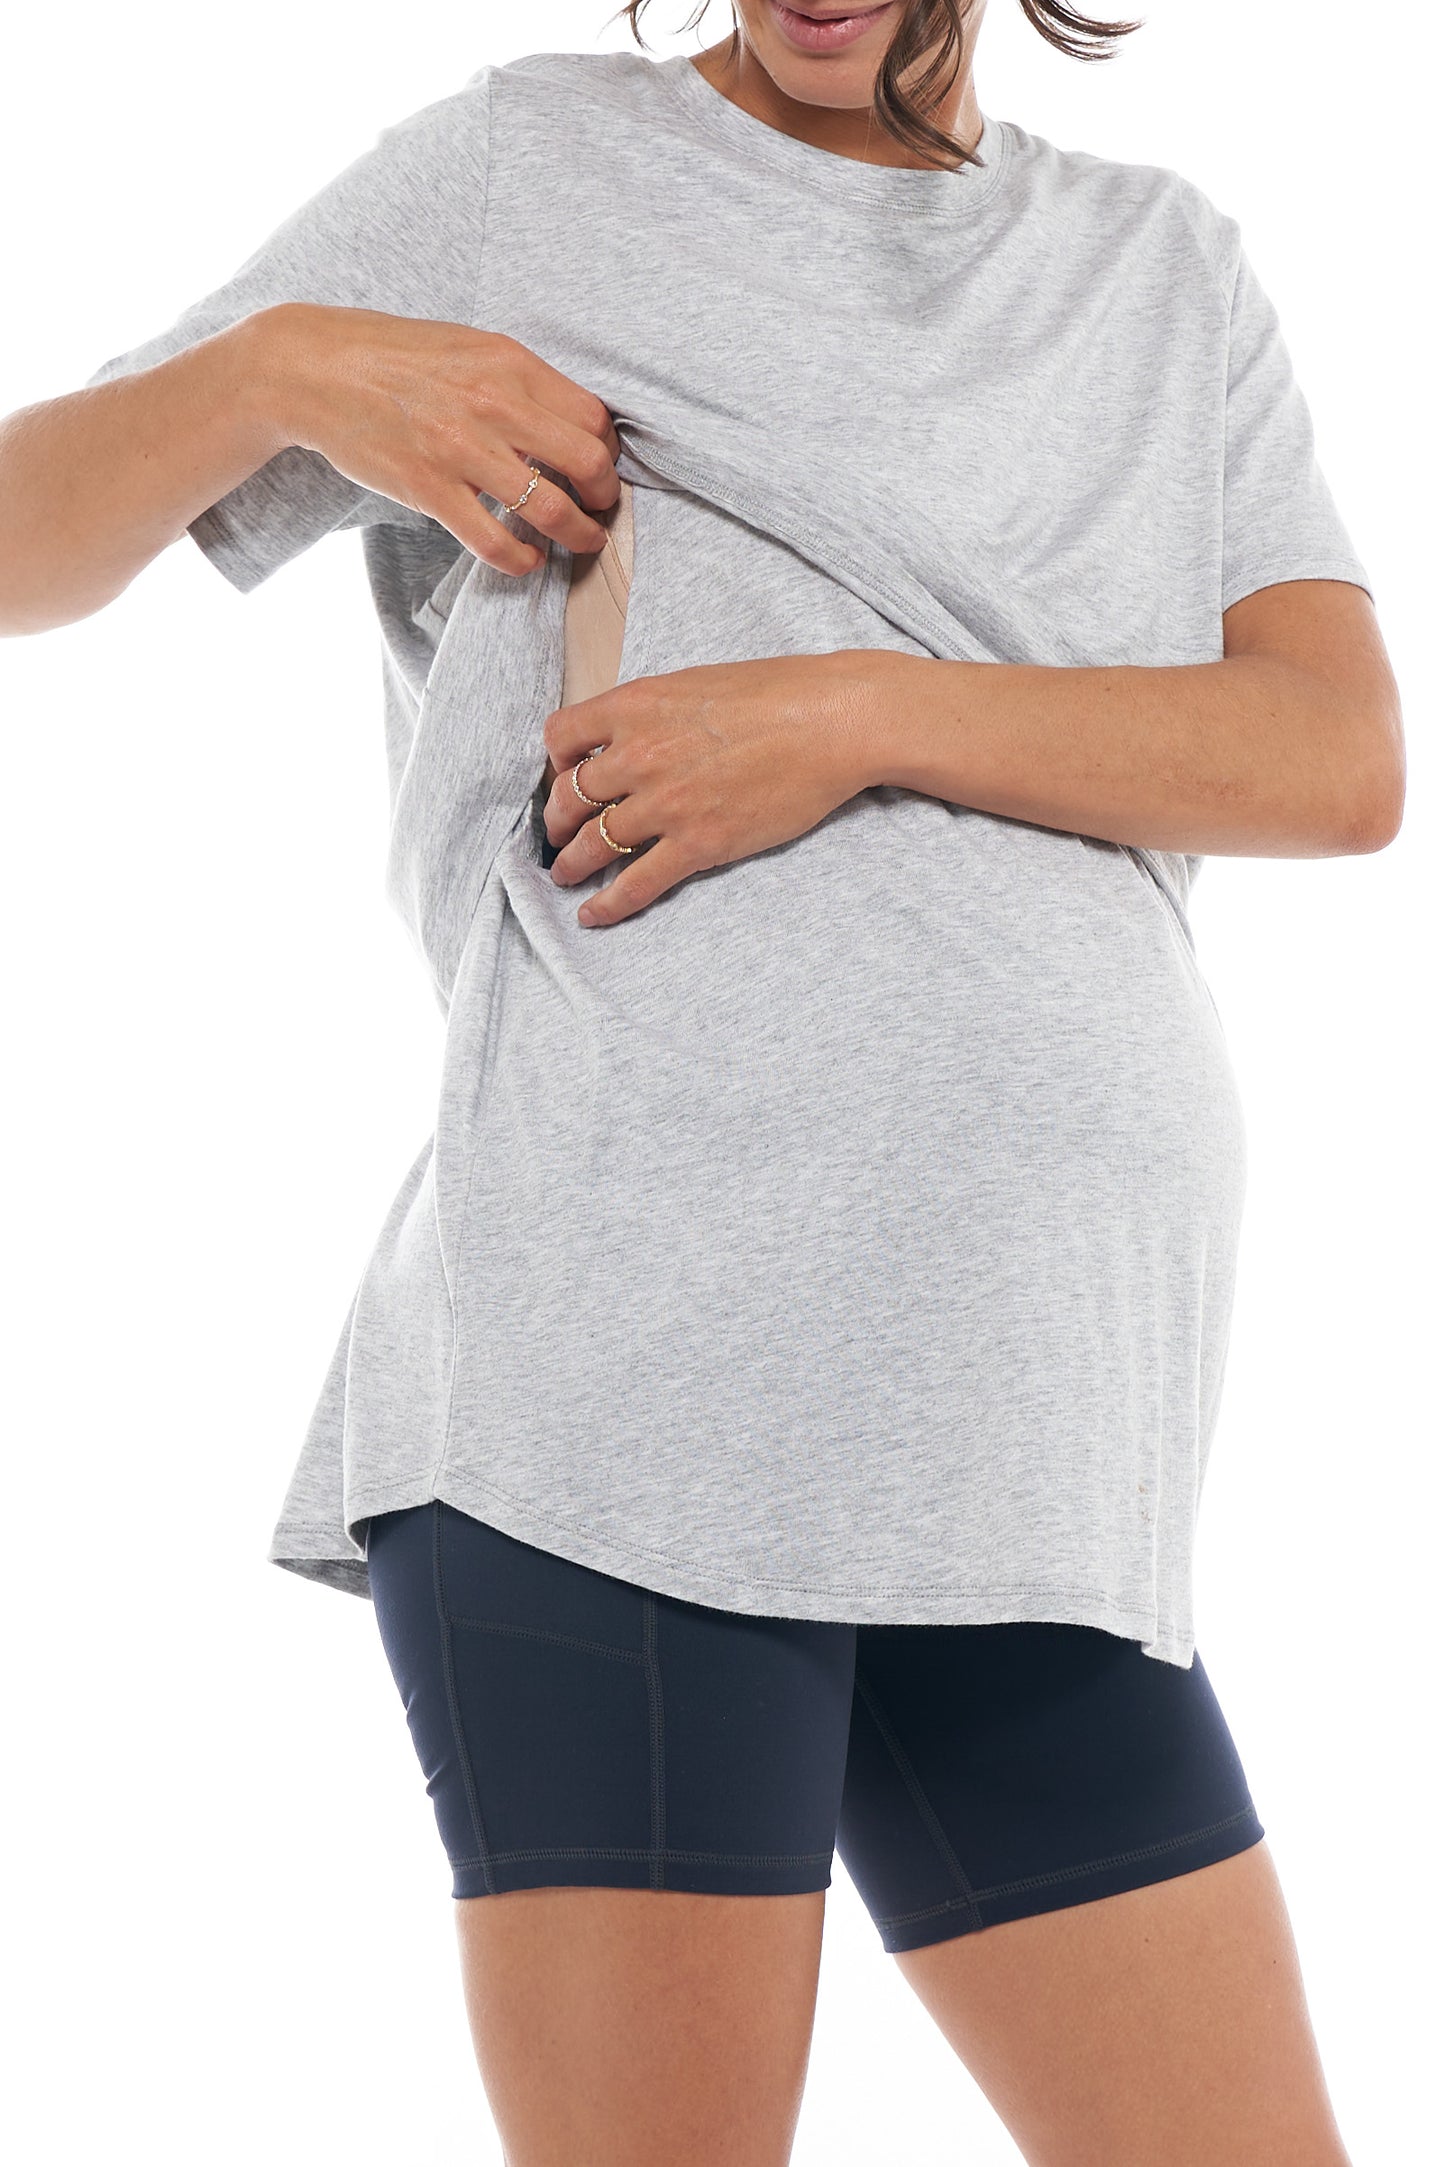 maternity and nursing top grey marle image 2